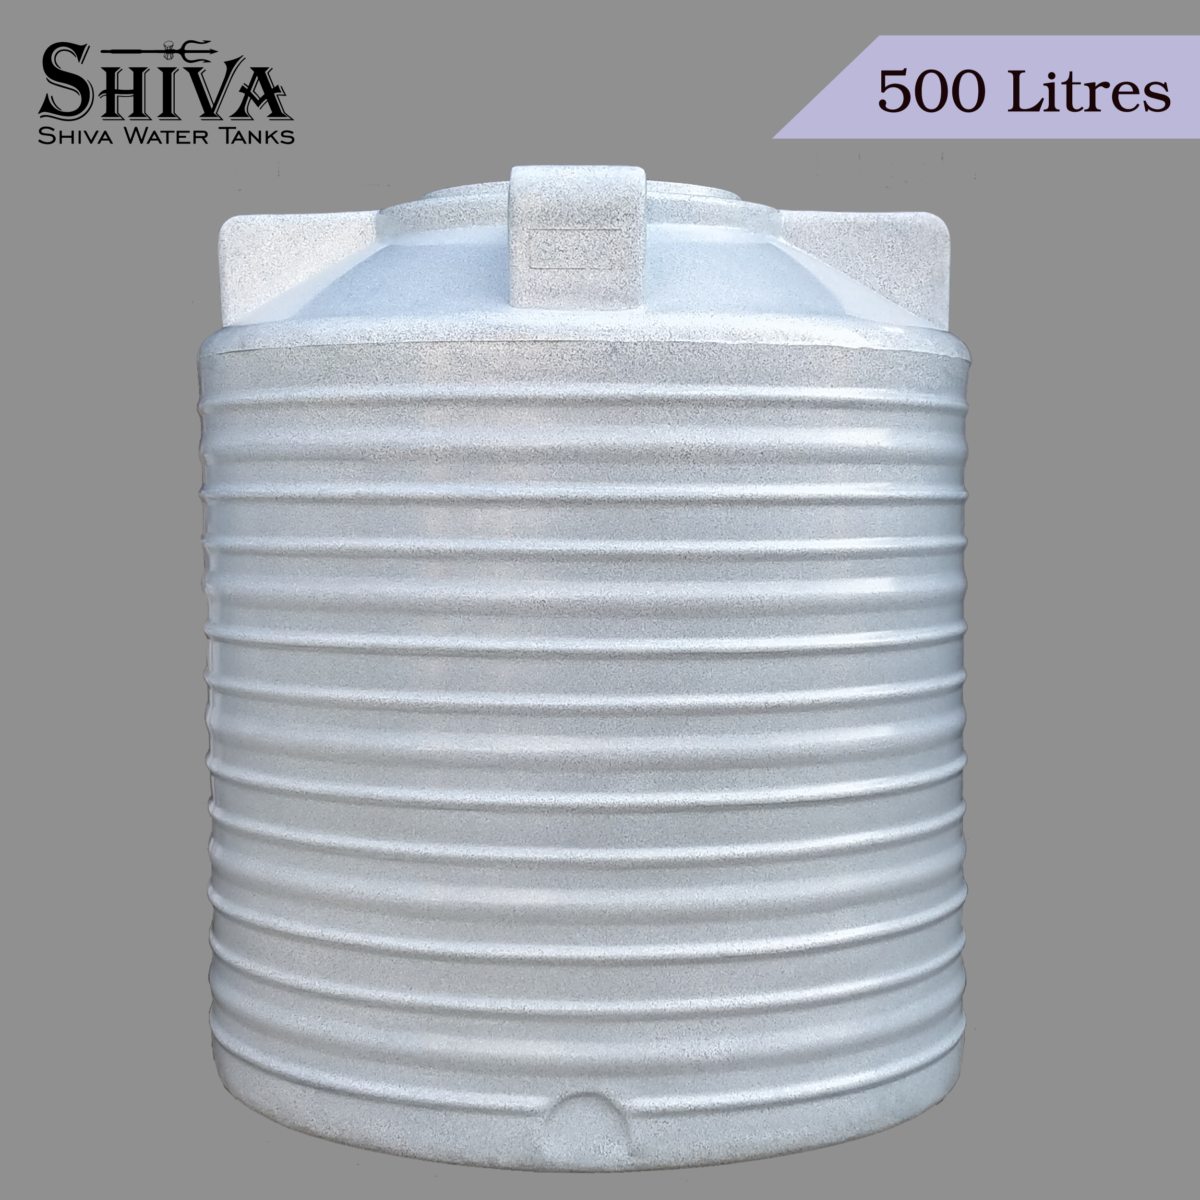 500 Litres - SHIVA U-Form - 4 Layers